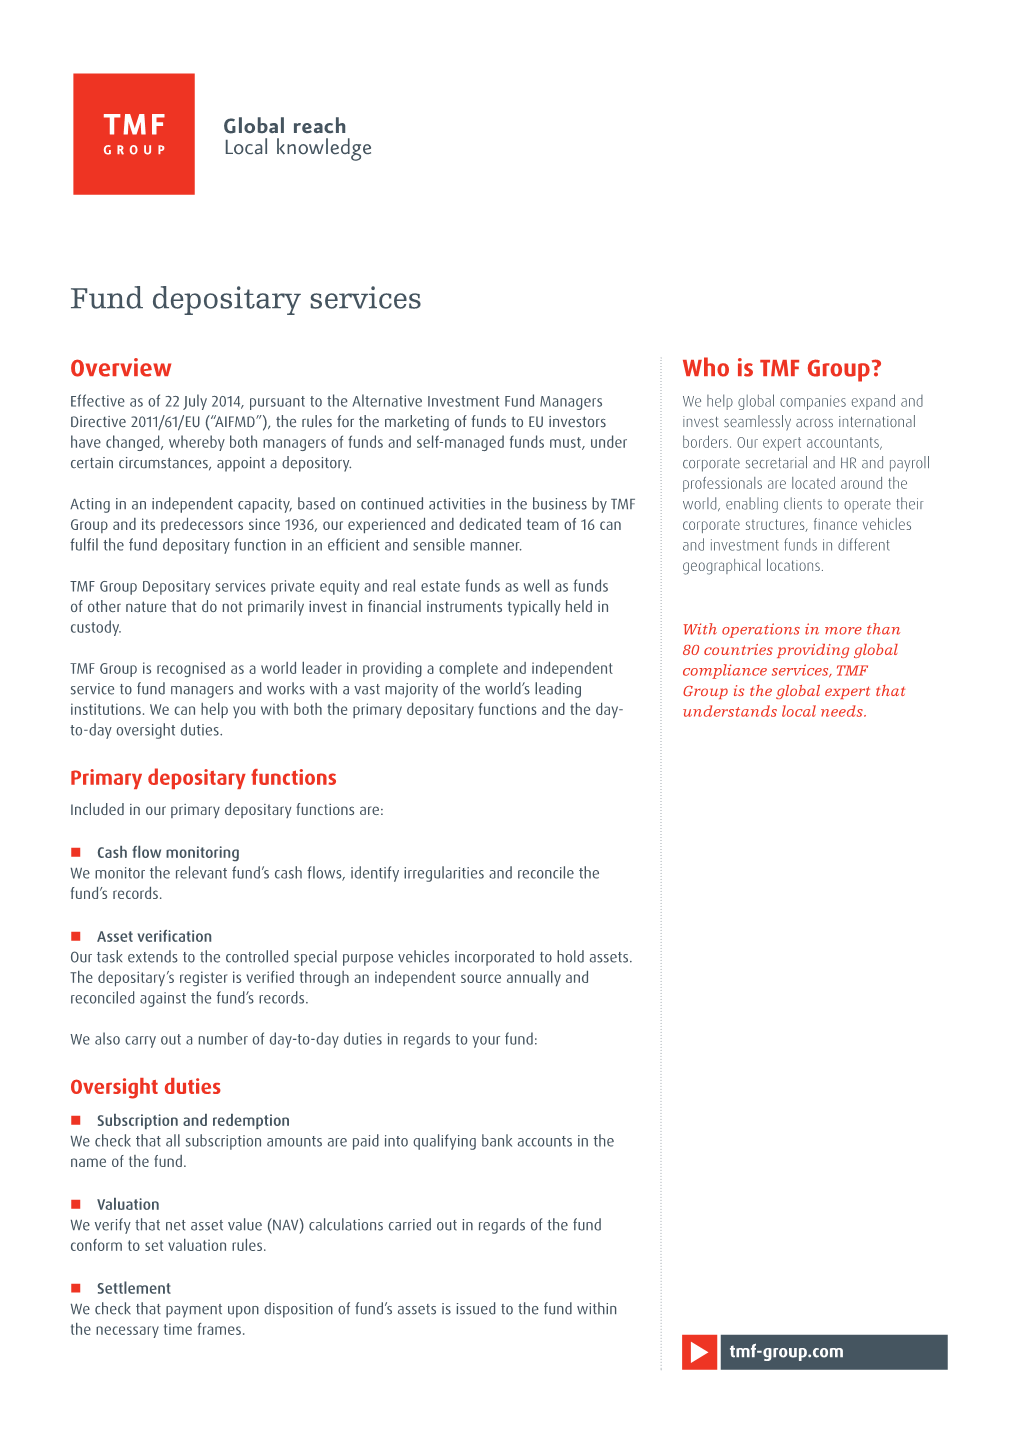 Fund Depositary Services